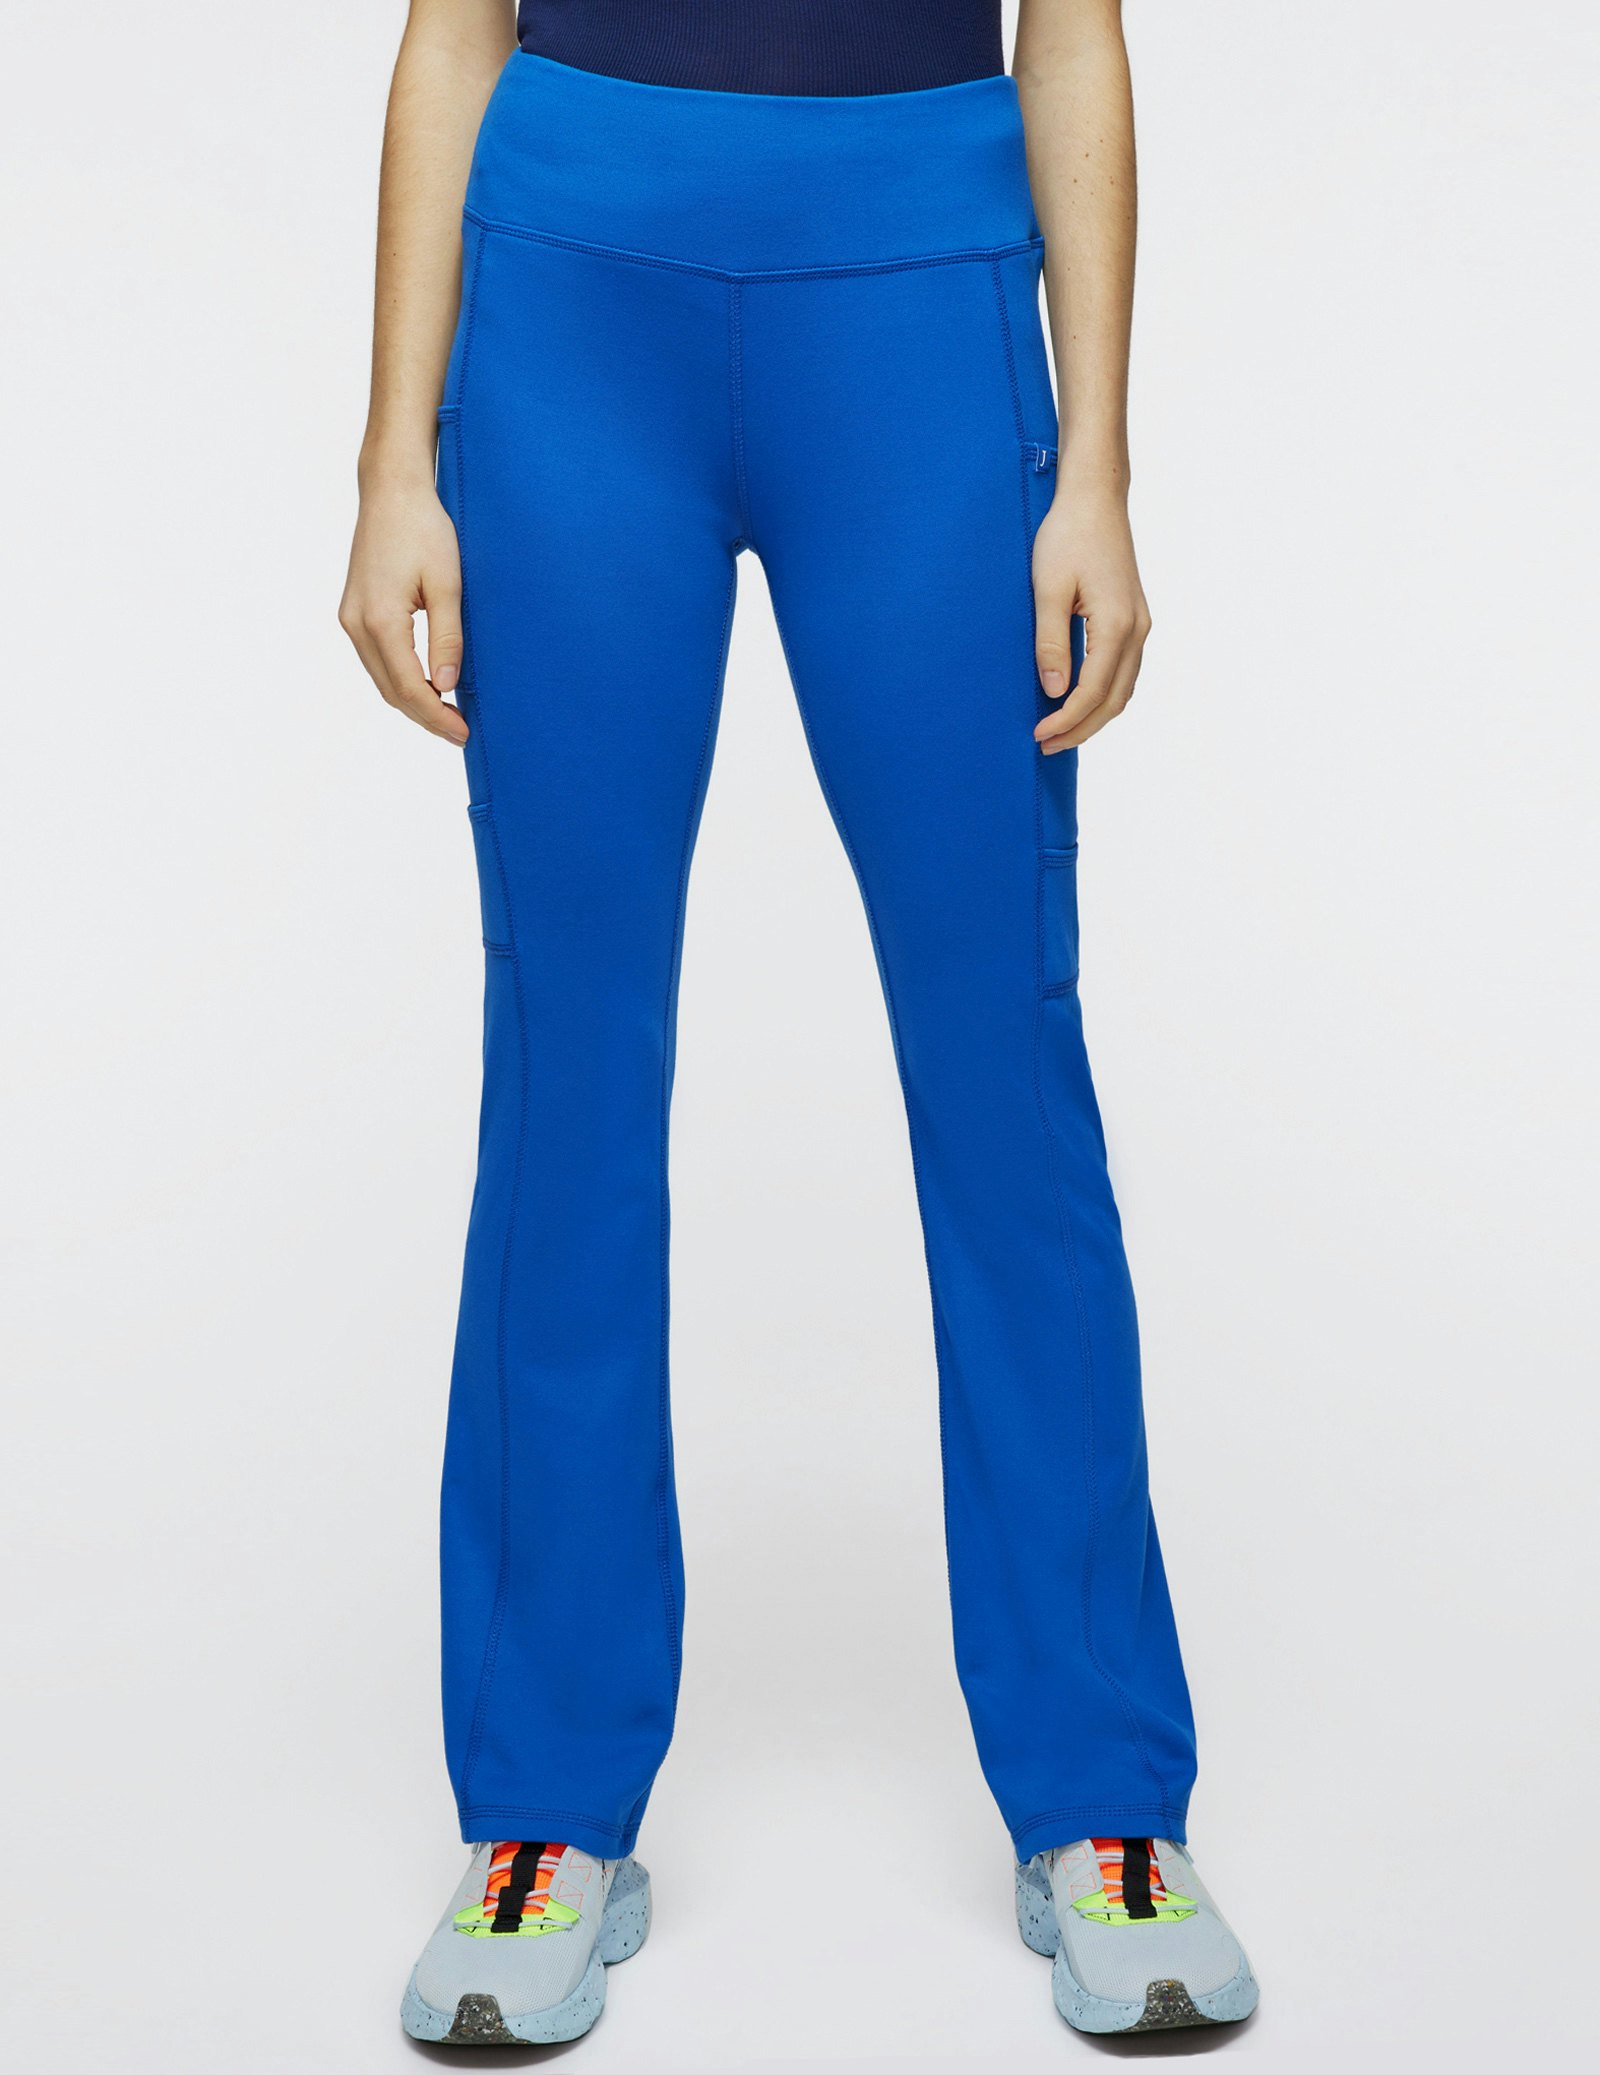 Women's Royal Blue Yoga Scrub Pants | Jaanuu